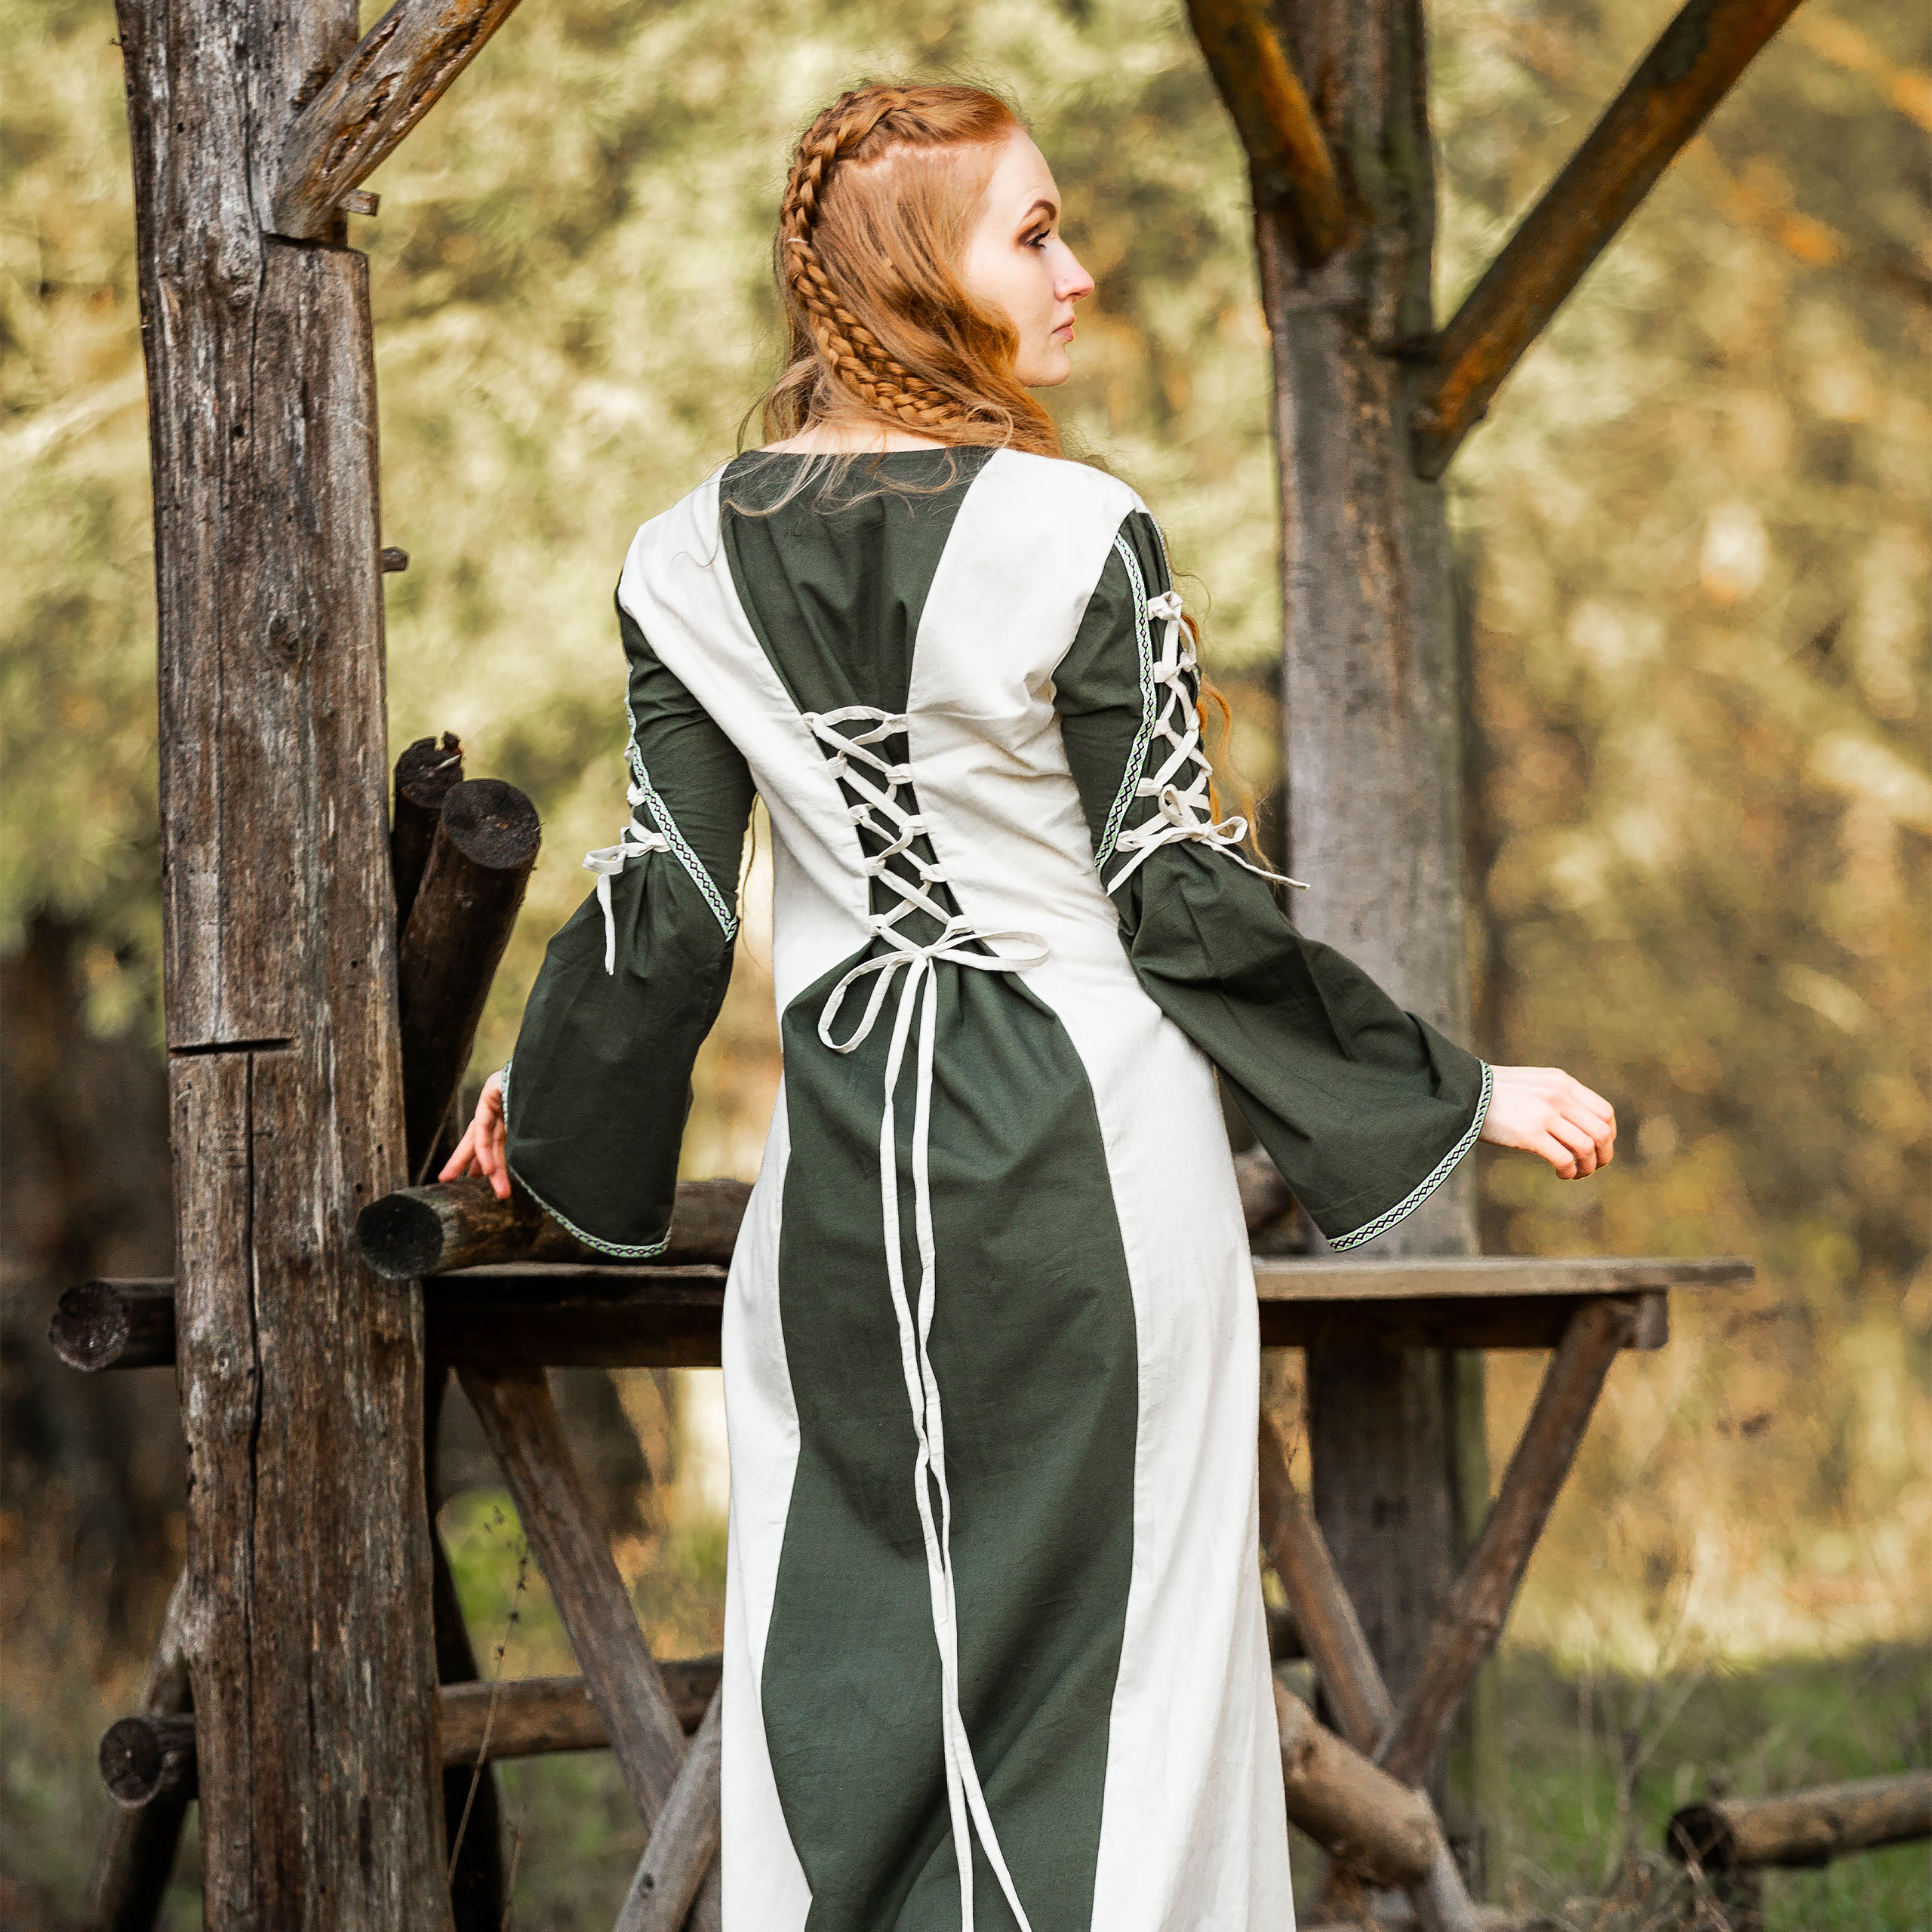 Robe médiévale avec laçage vert-nature